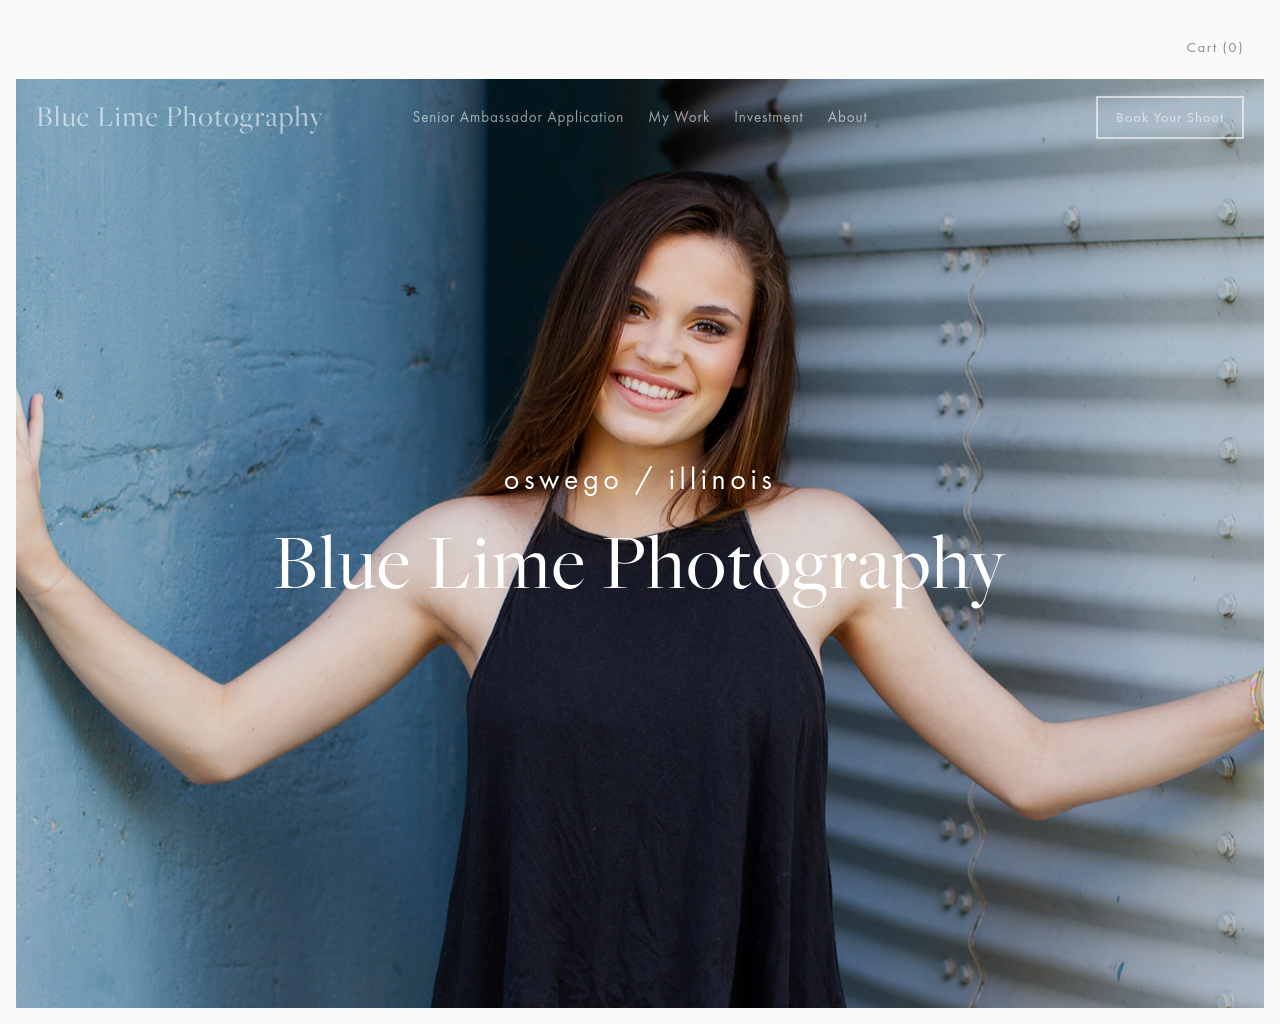 bluelimephotography.com